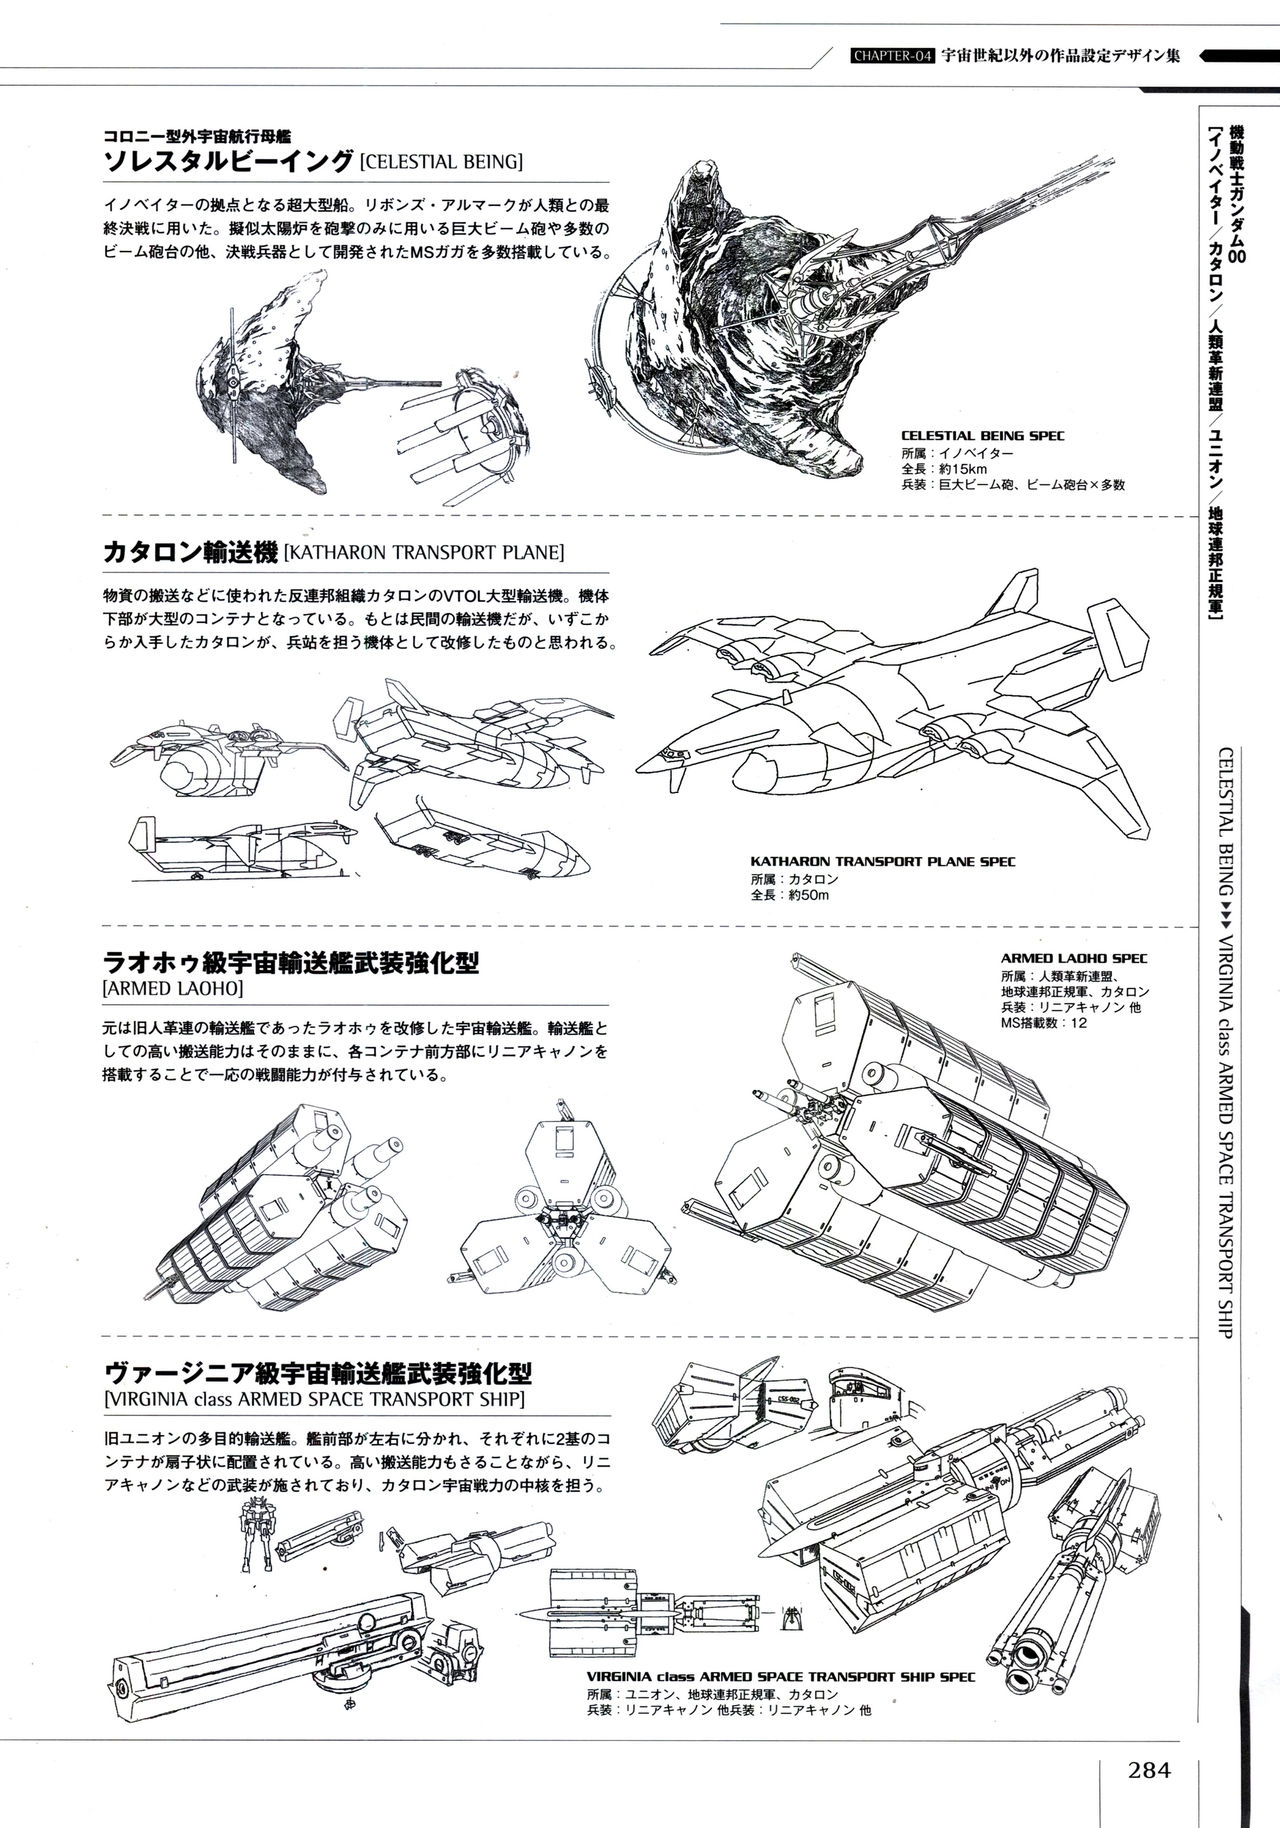 Mobile Suit Gundam - Ship & Aerospace Plane Encyclopedia - Revised Edition 289